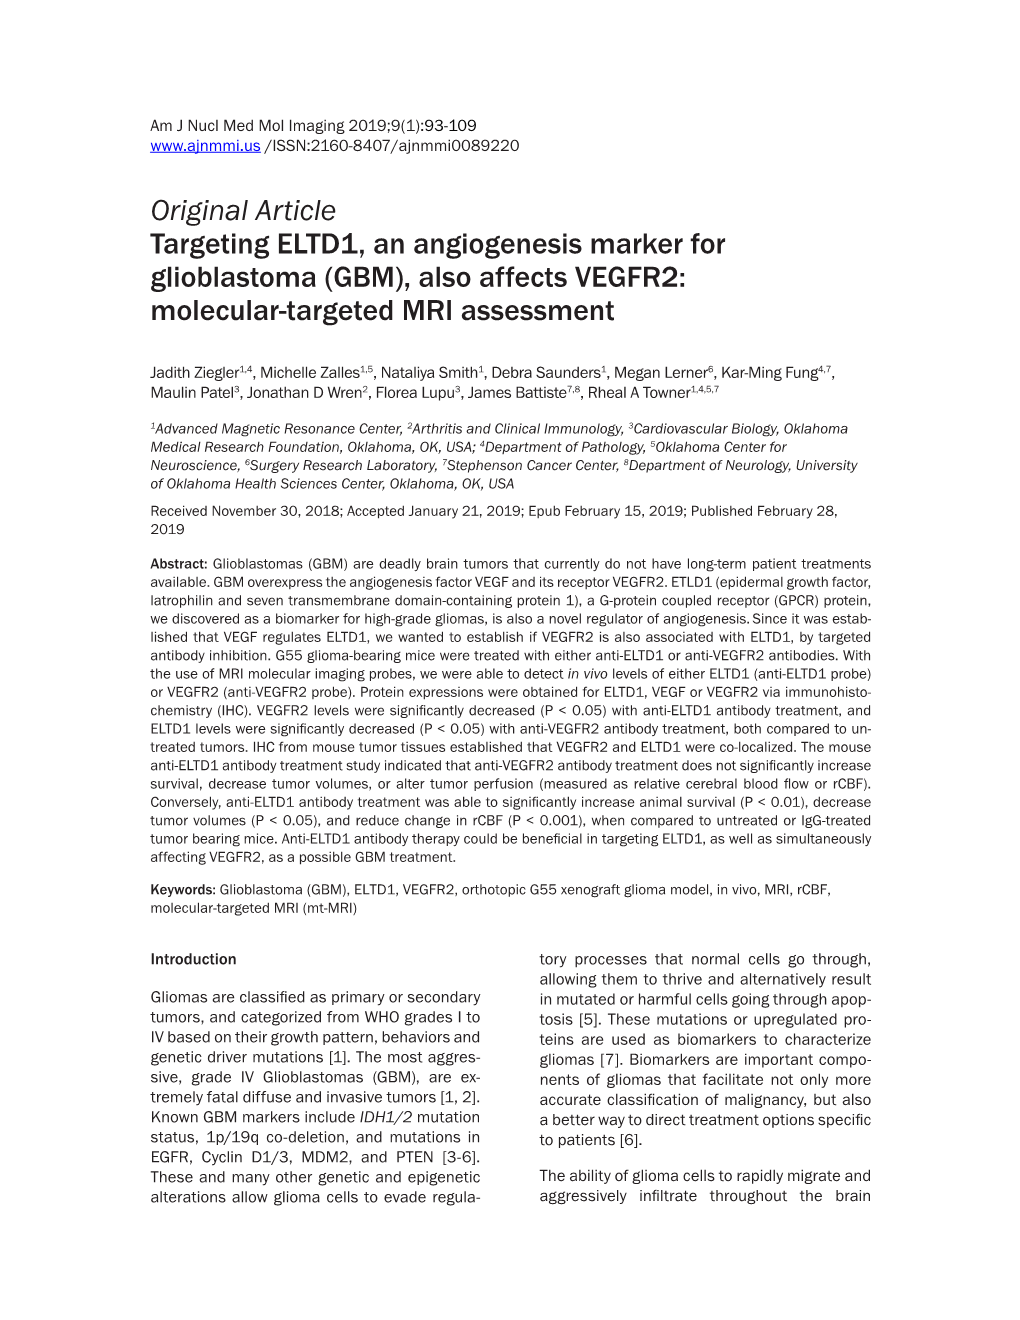 Original Article Targeting ELTD1, an Angiogenesis Marker for Glioblastoma (GBM), Also Affects VEGFR2: Molecular-Targeted MRI Assessment